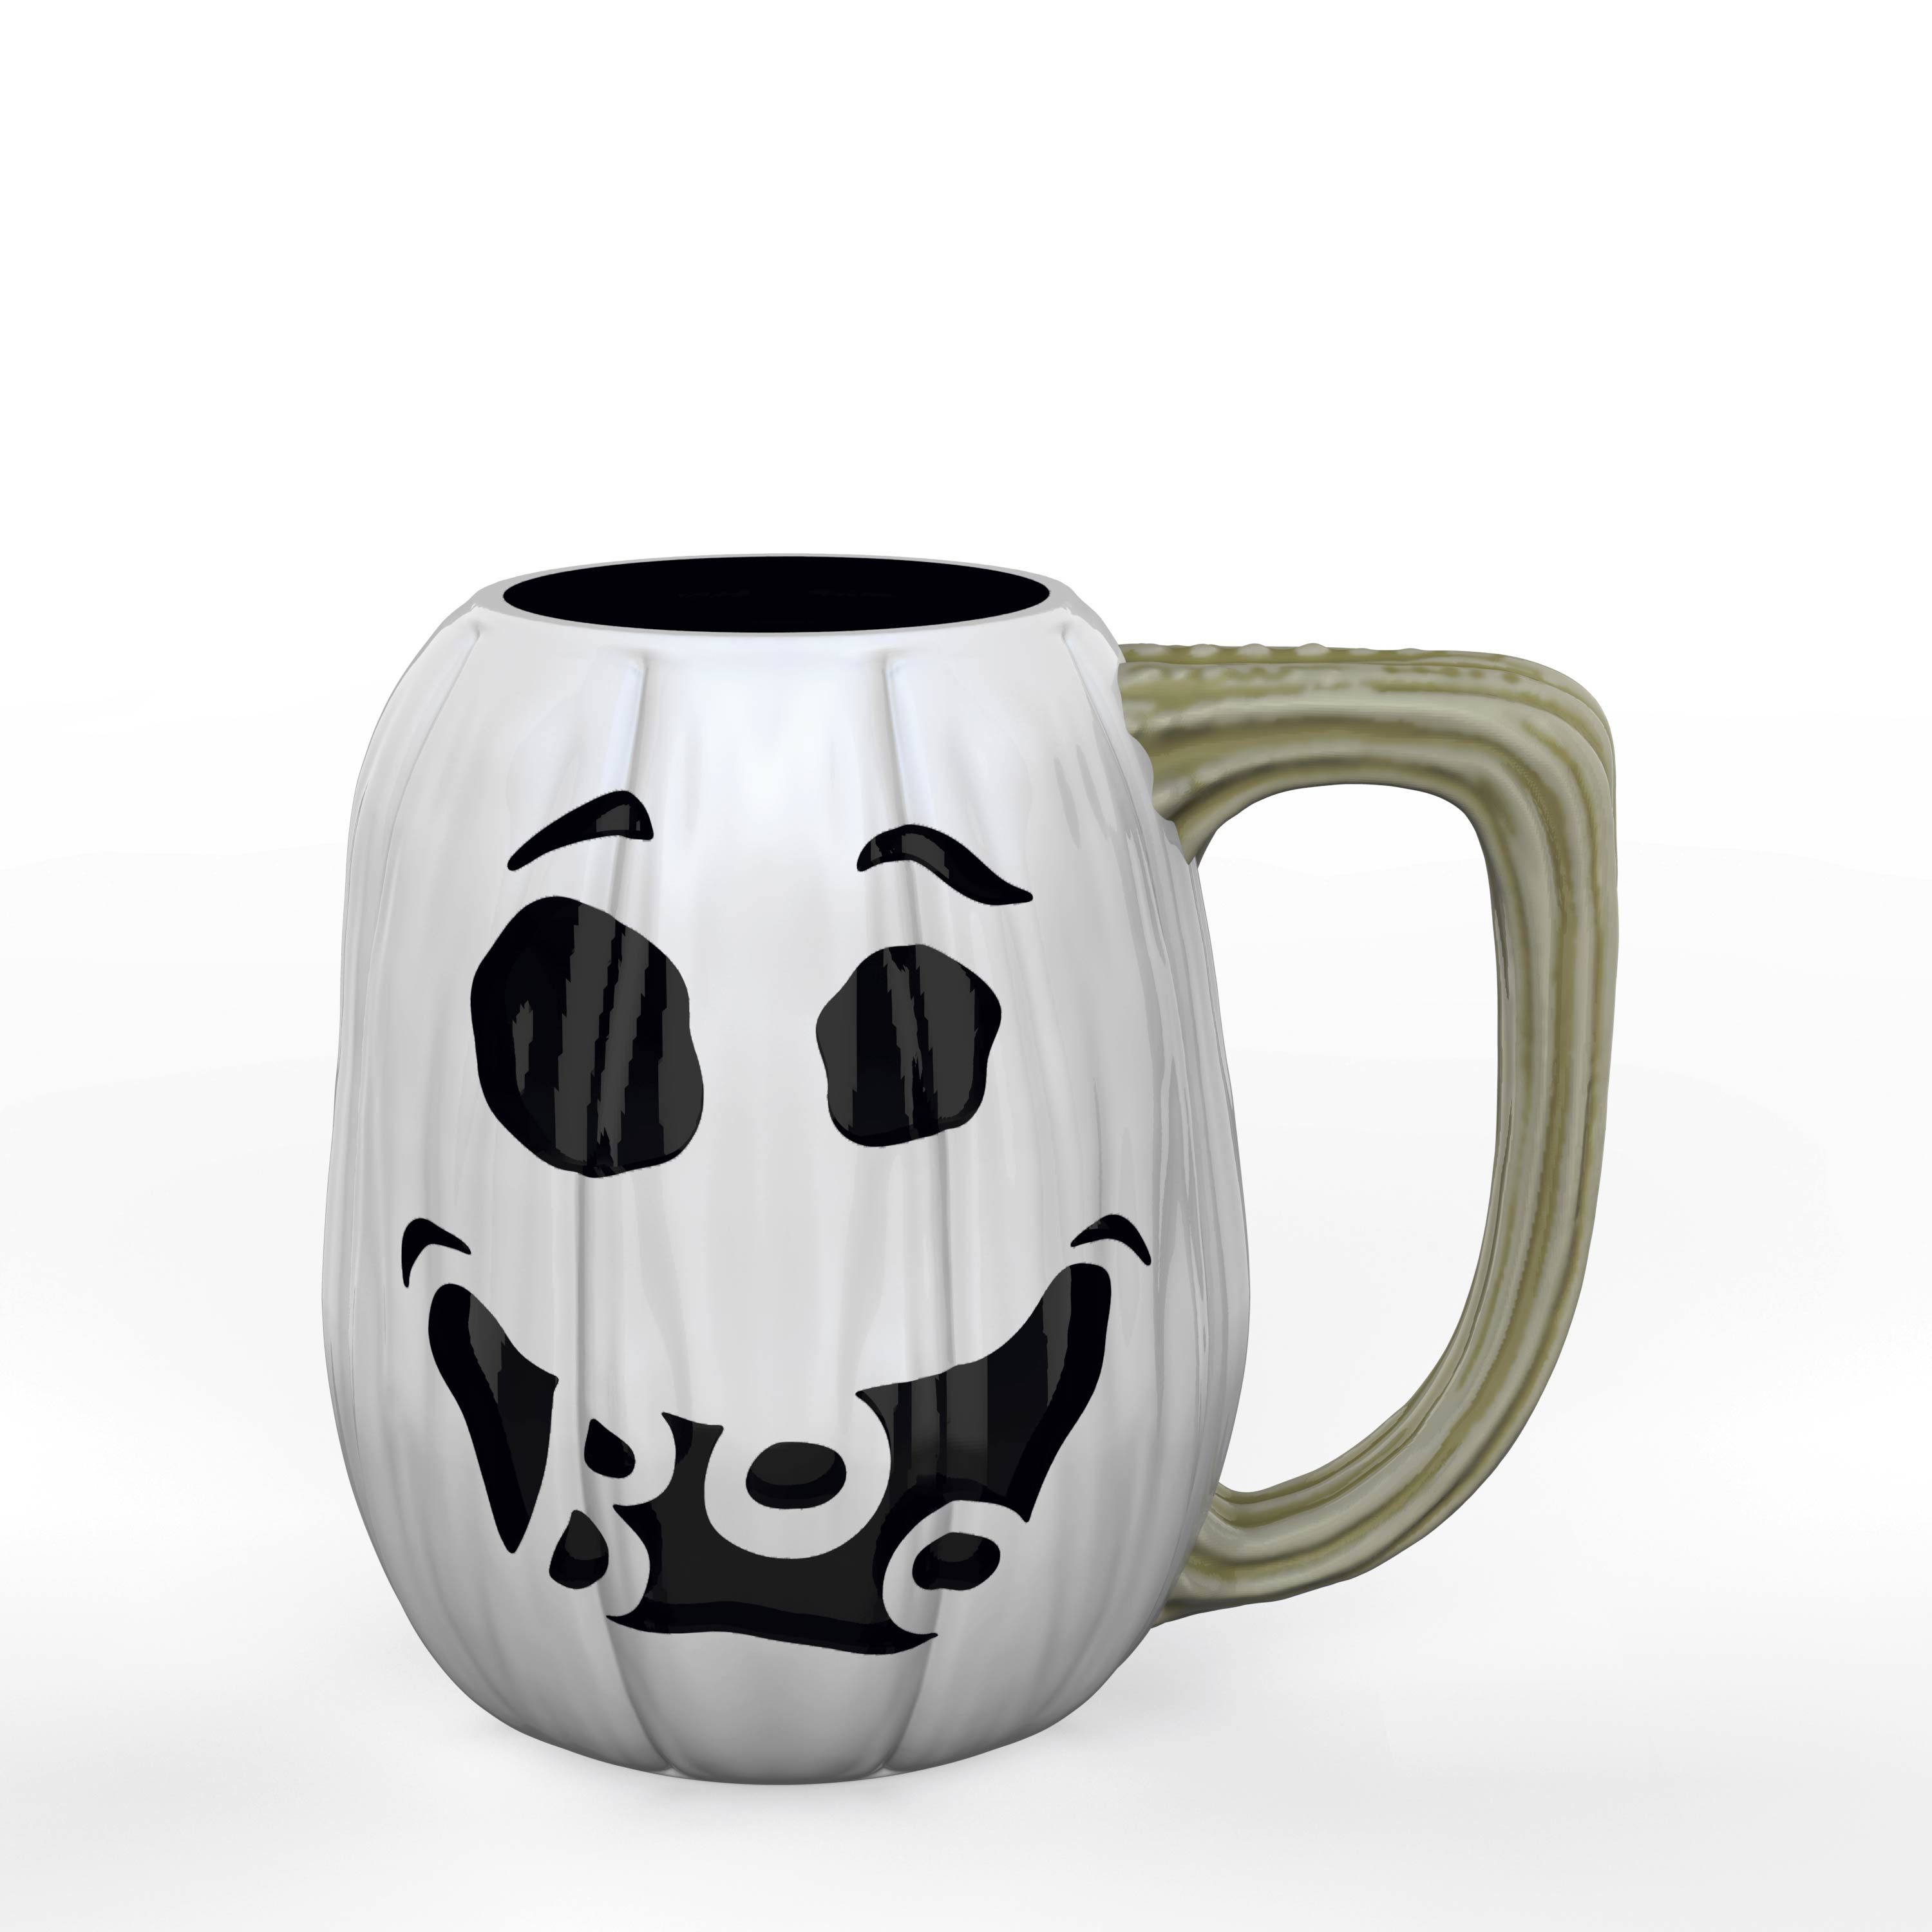 Pumpkin Coffee Mug / peanuts the great pumpkin 15 oz cermic coffee mug with spoon B07WRY9R65 